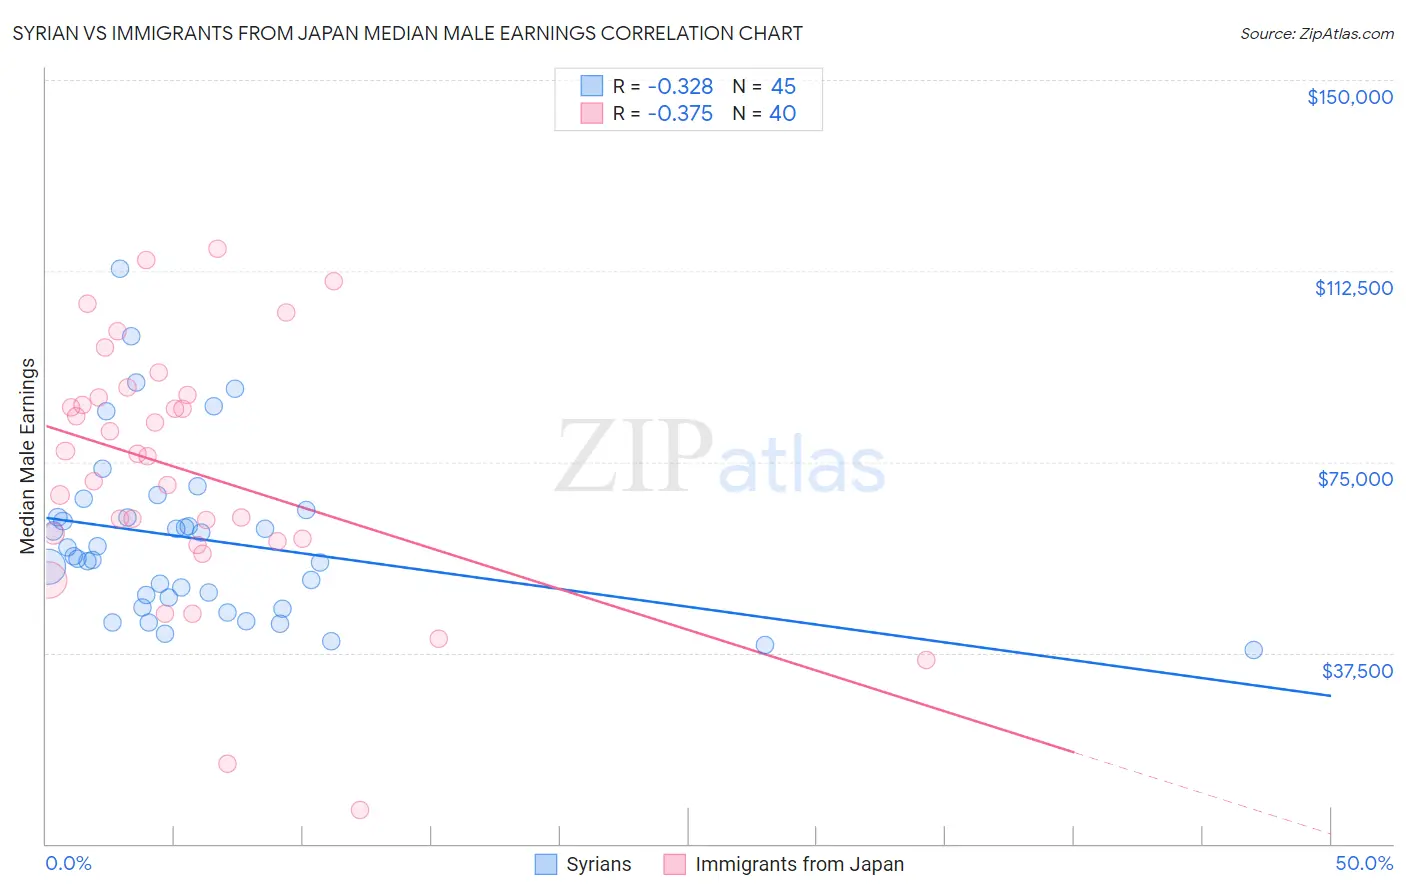 Syrian vs Immigrants from Japan Median Male Earnings